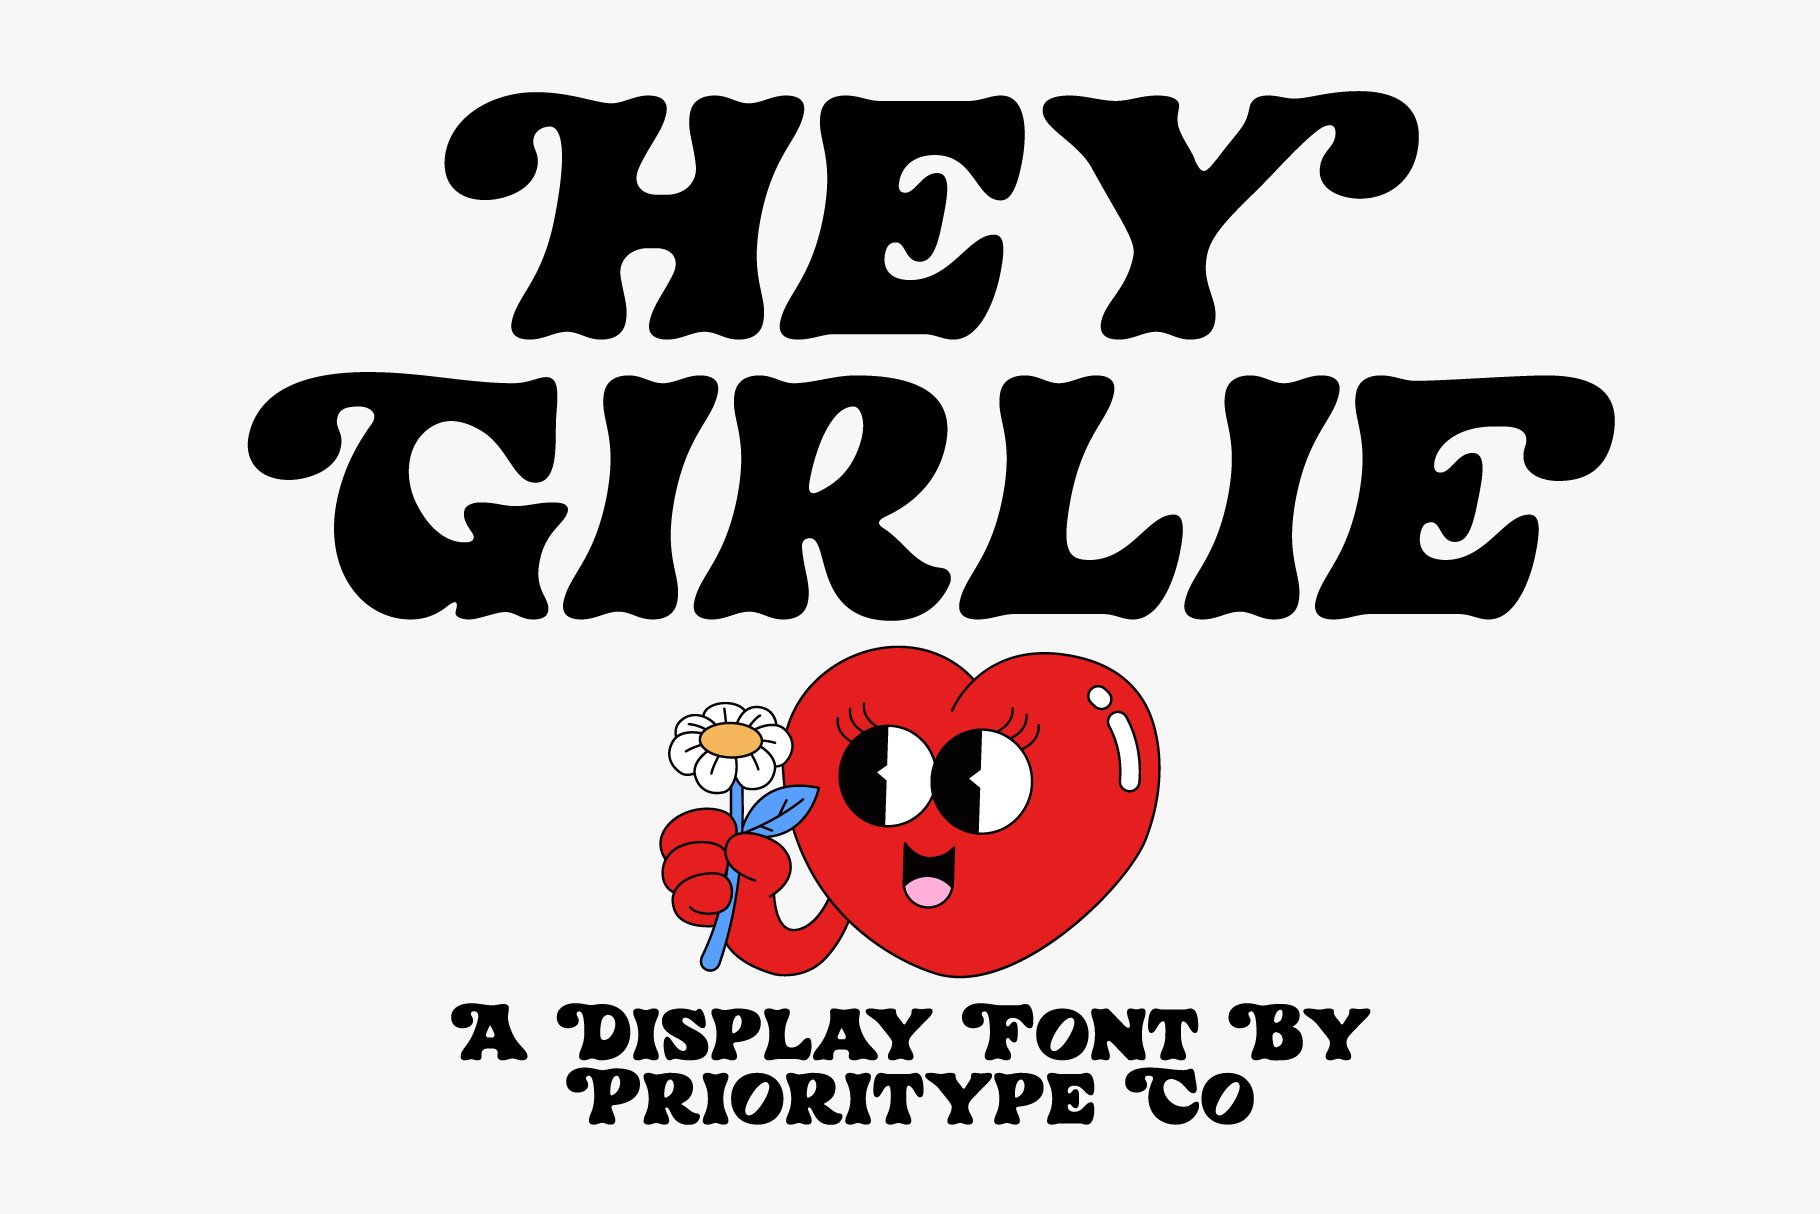 Hey Girlie - Display Font cover image.